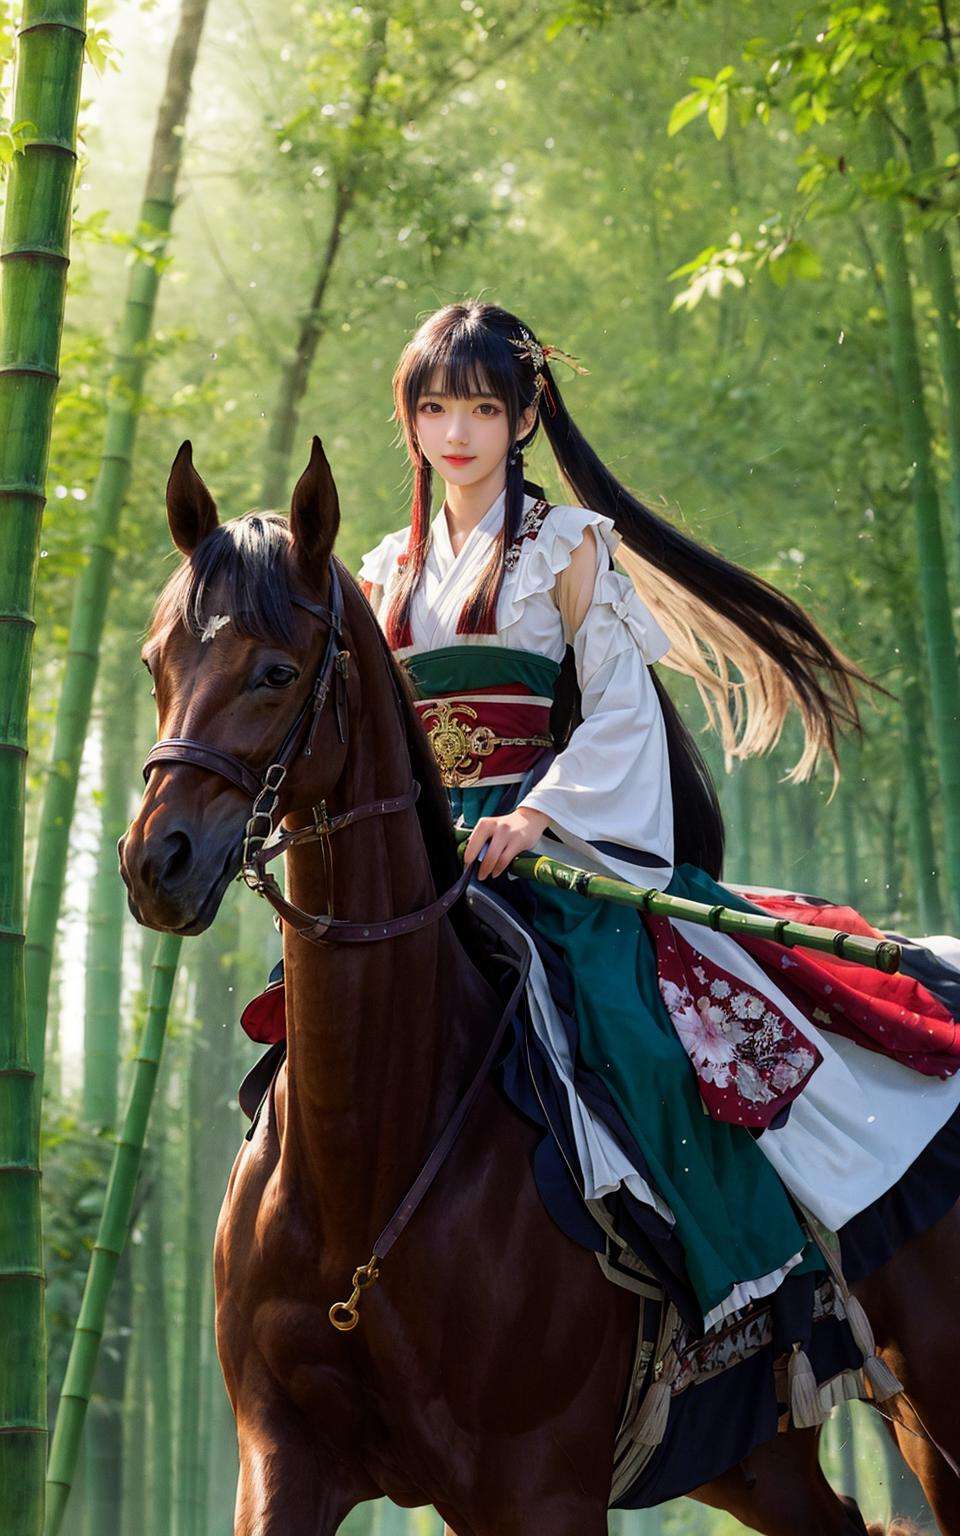 Masterpiece,best quality,(Highest picture quality),(Master's work),(ultra-detailed),{top quality},1girl,dress,Bamboo forest,horse,sword,battle,yaguru magiku,